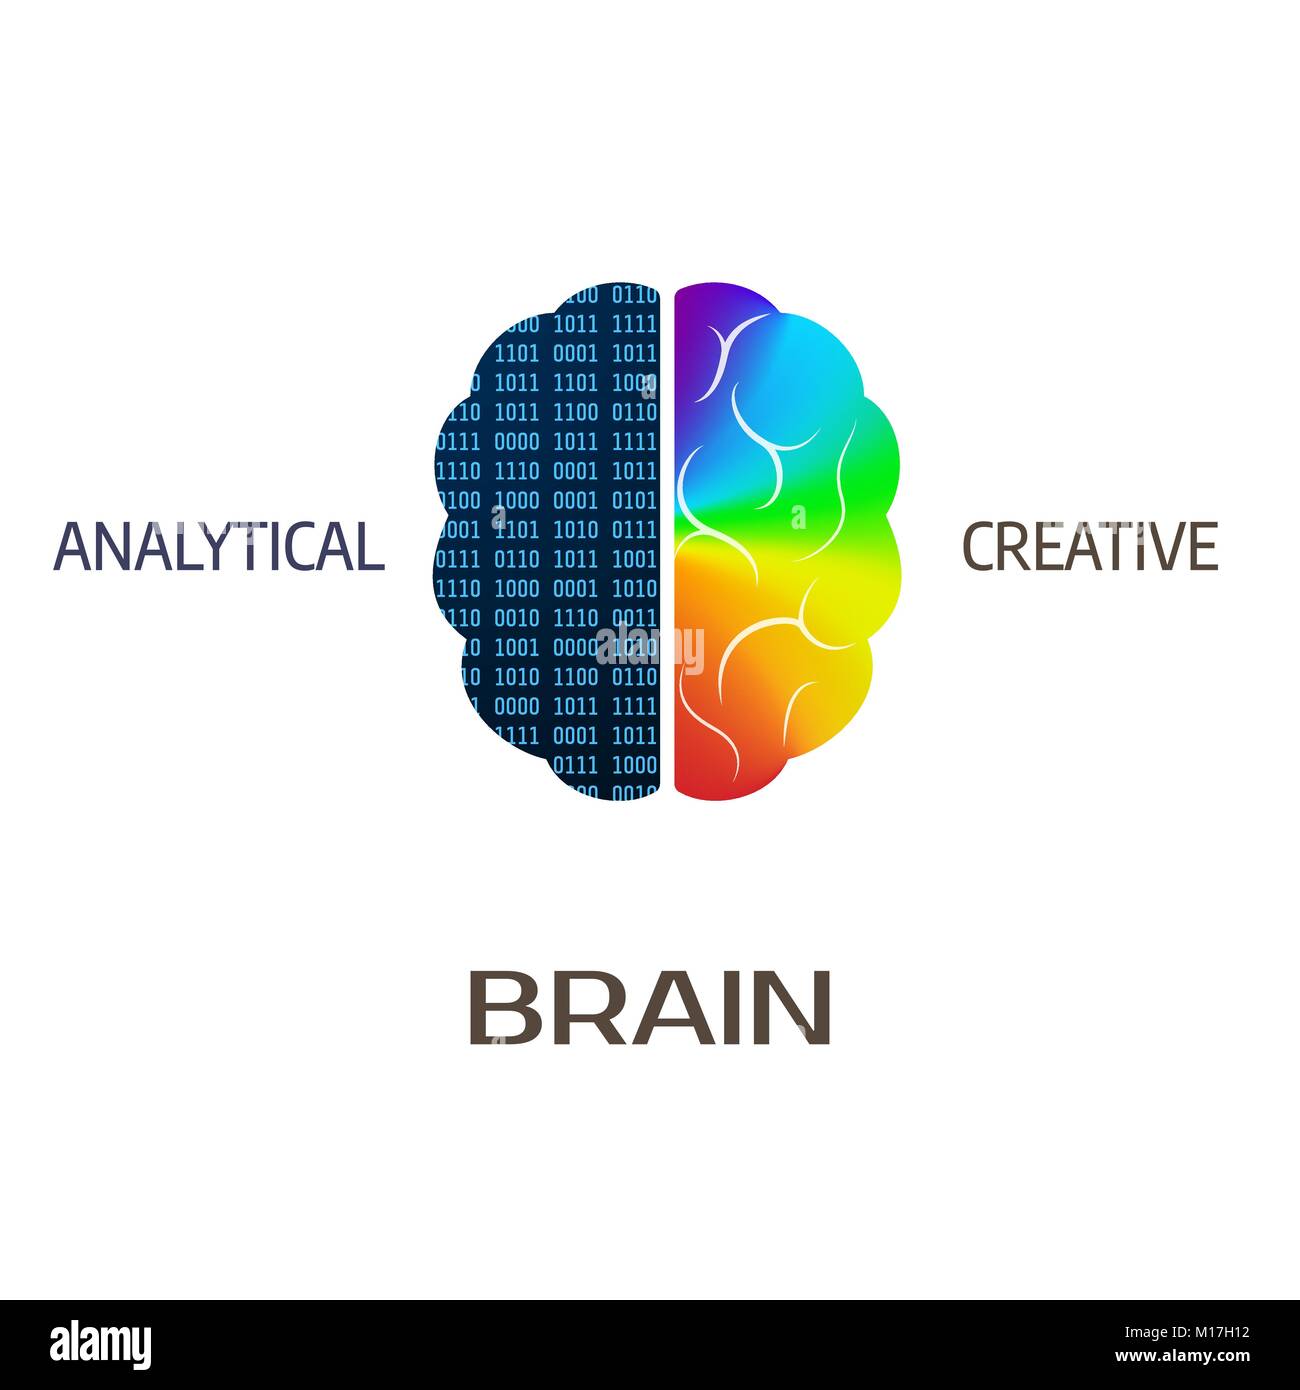 Brain icon. Left brain part - analytical. Right hemisphere of brain - creative. Vector illustration Stock Vector